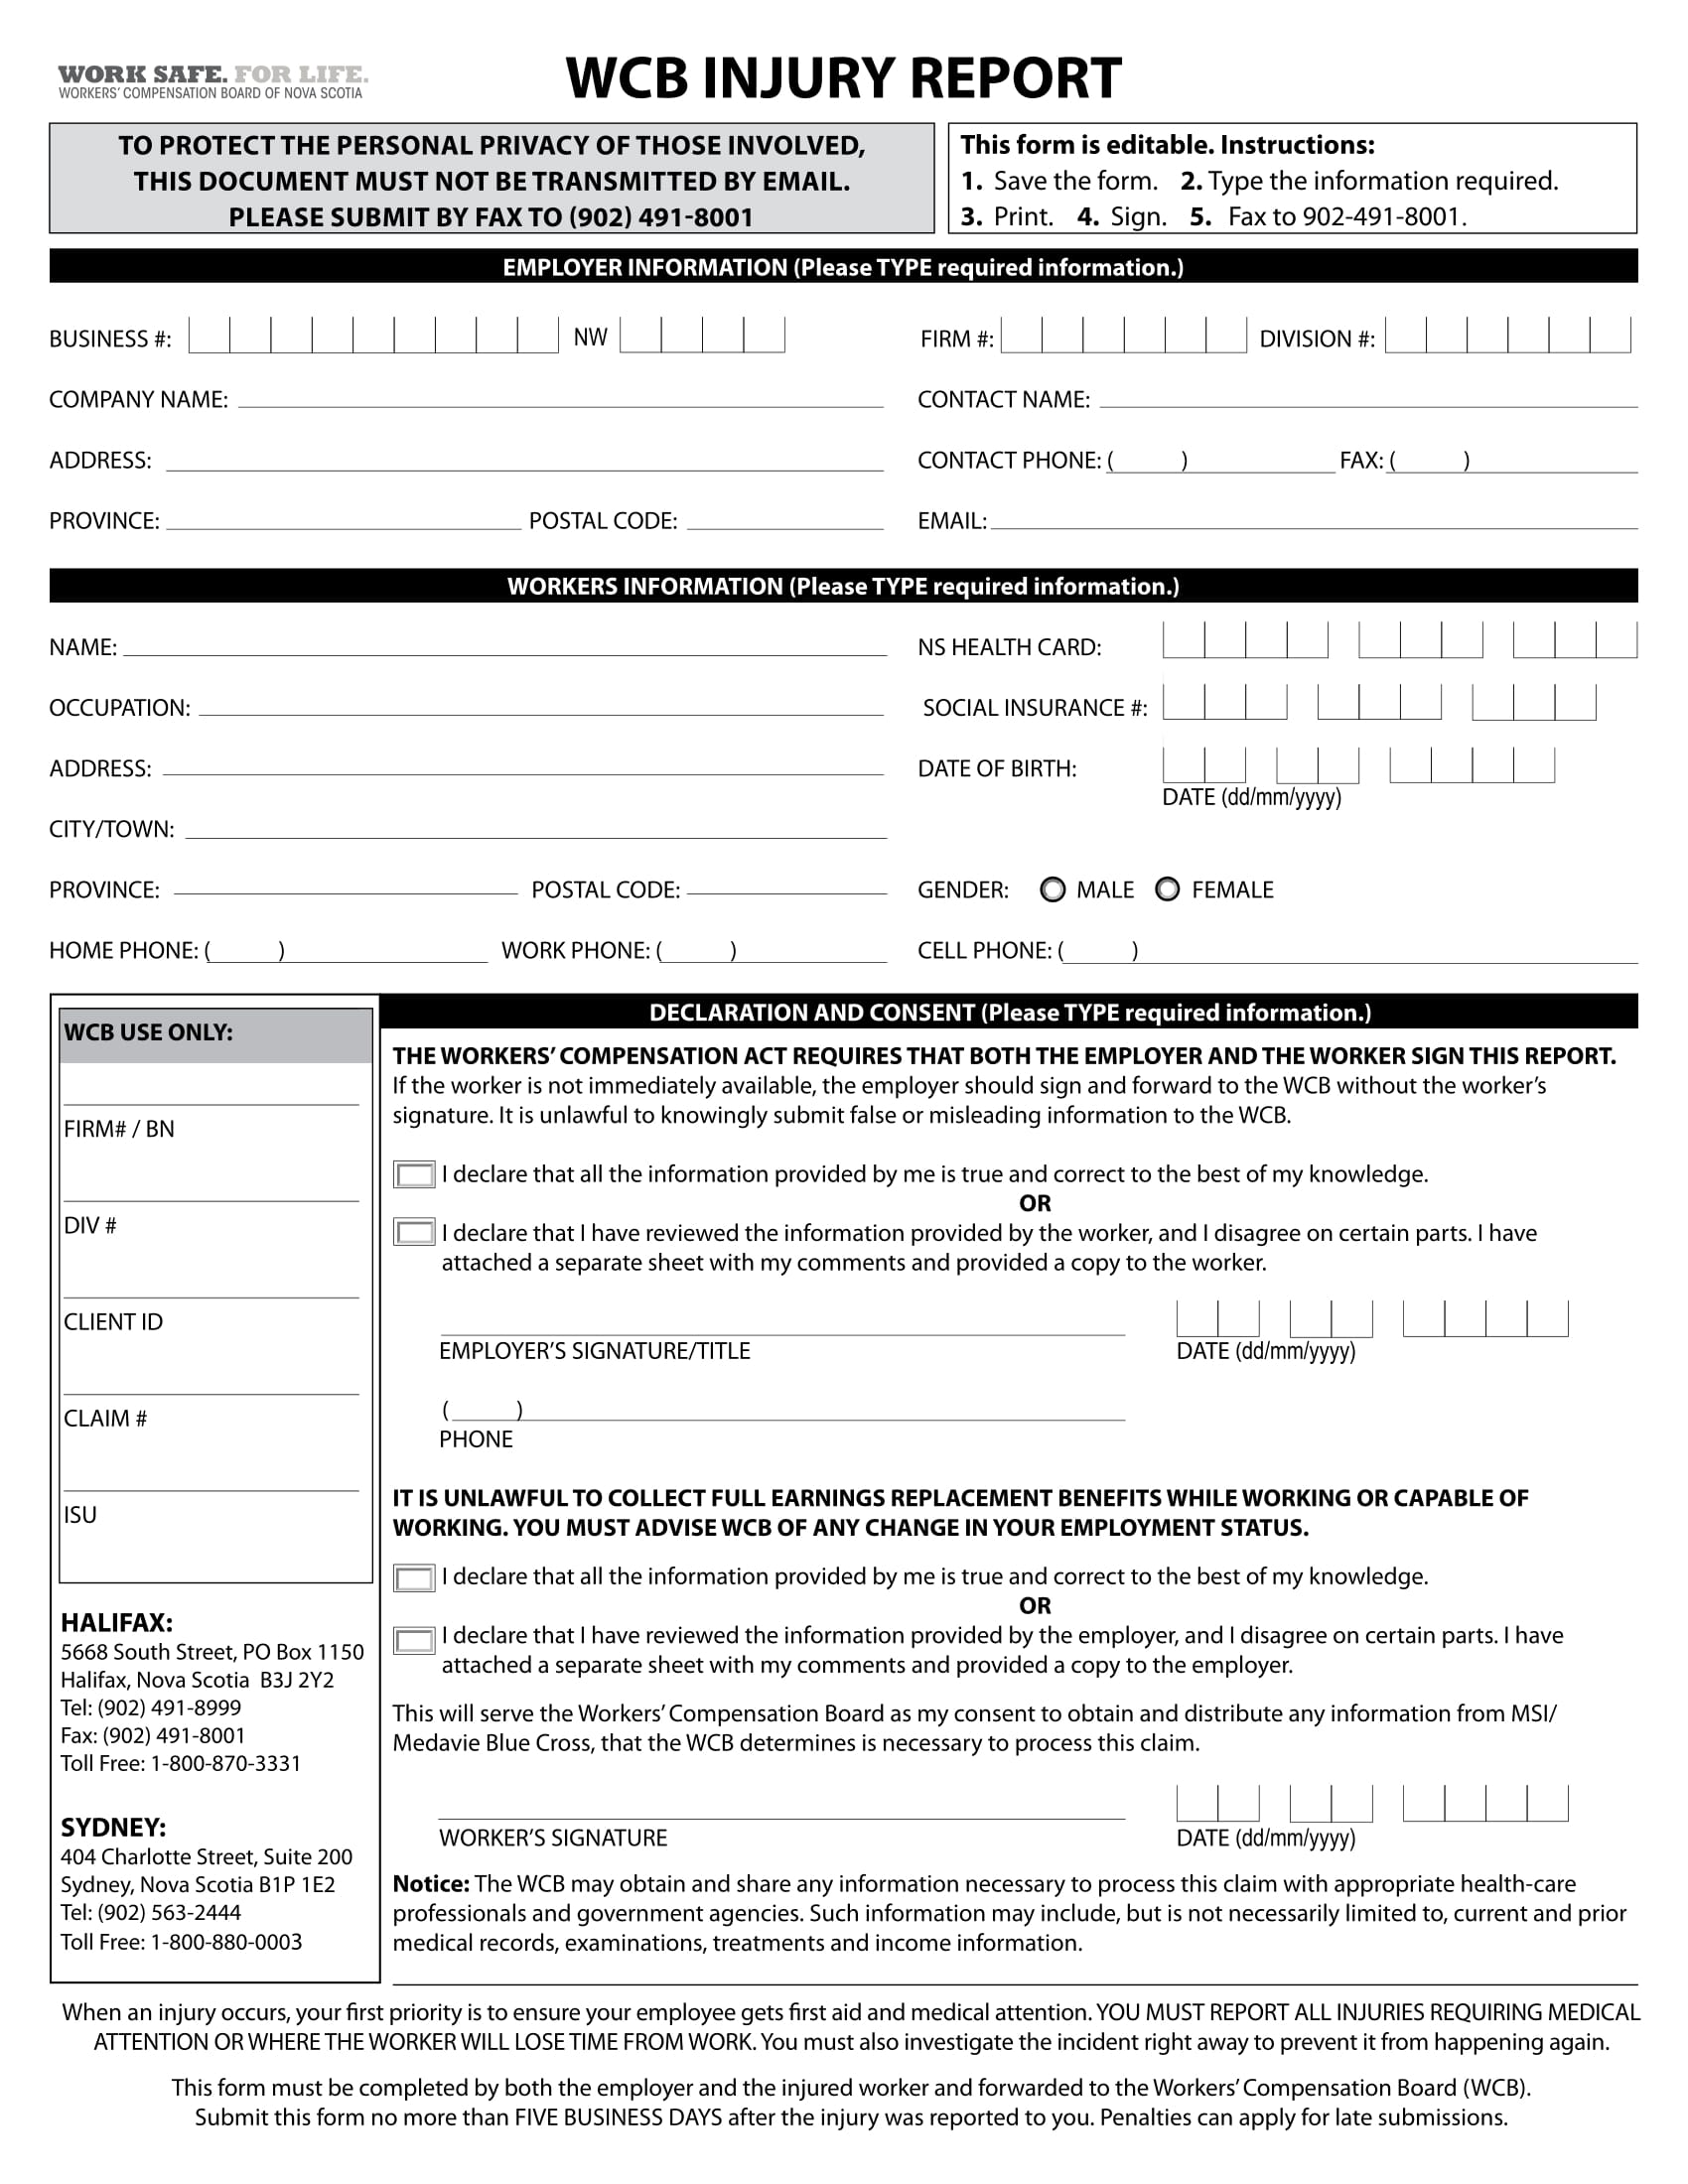 injury report form sample 1